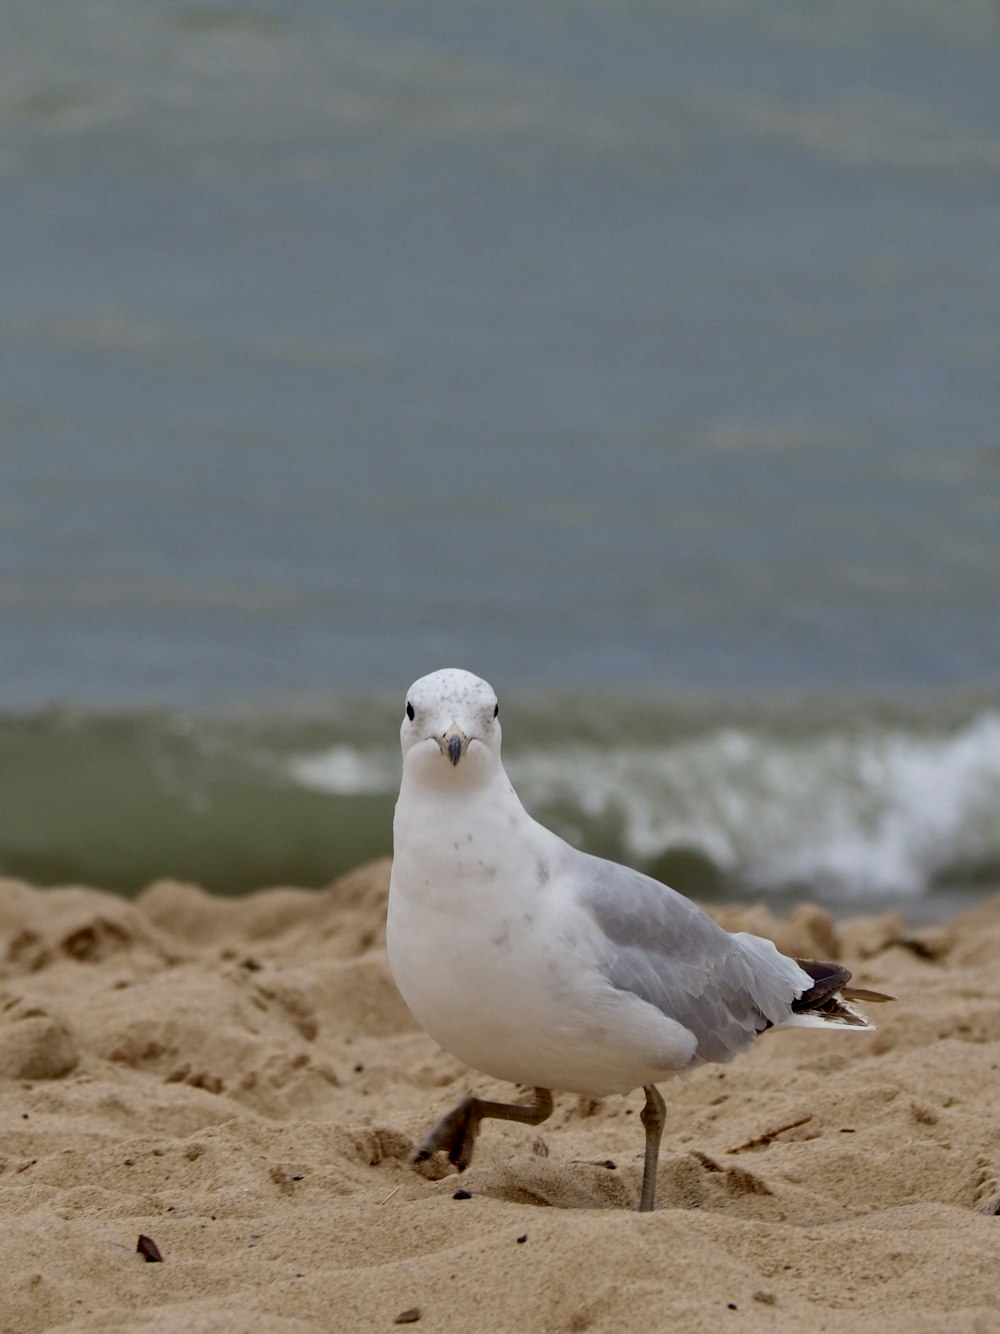 a seagull walking on the sand near the ocean